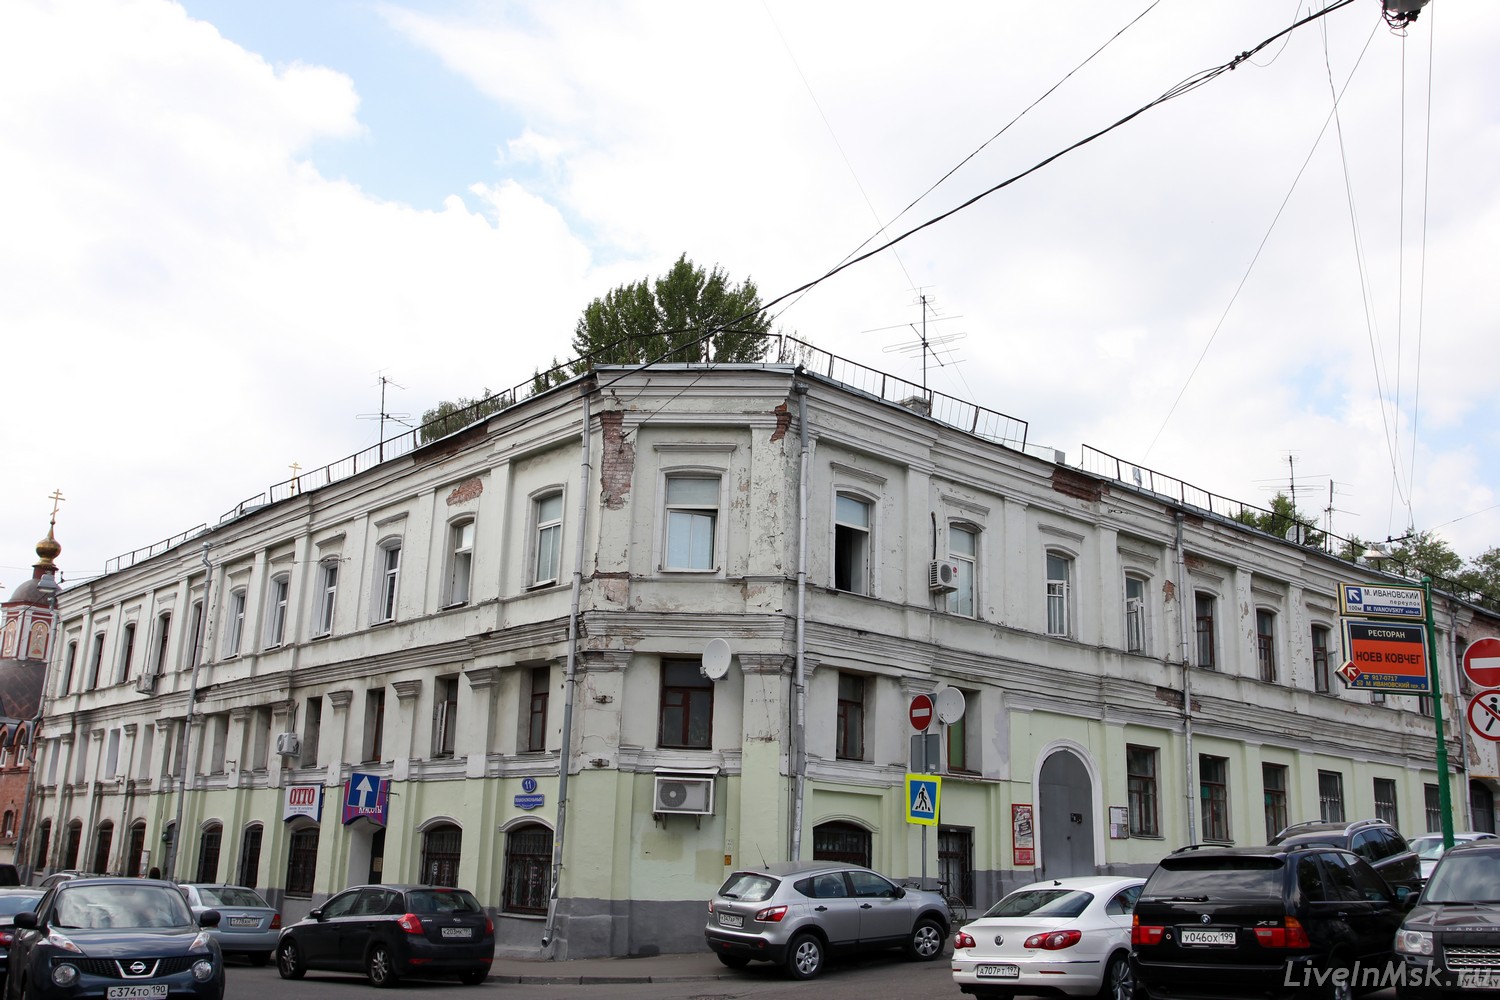 Дом Ярошенко на Хитровке, фото 2014 года